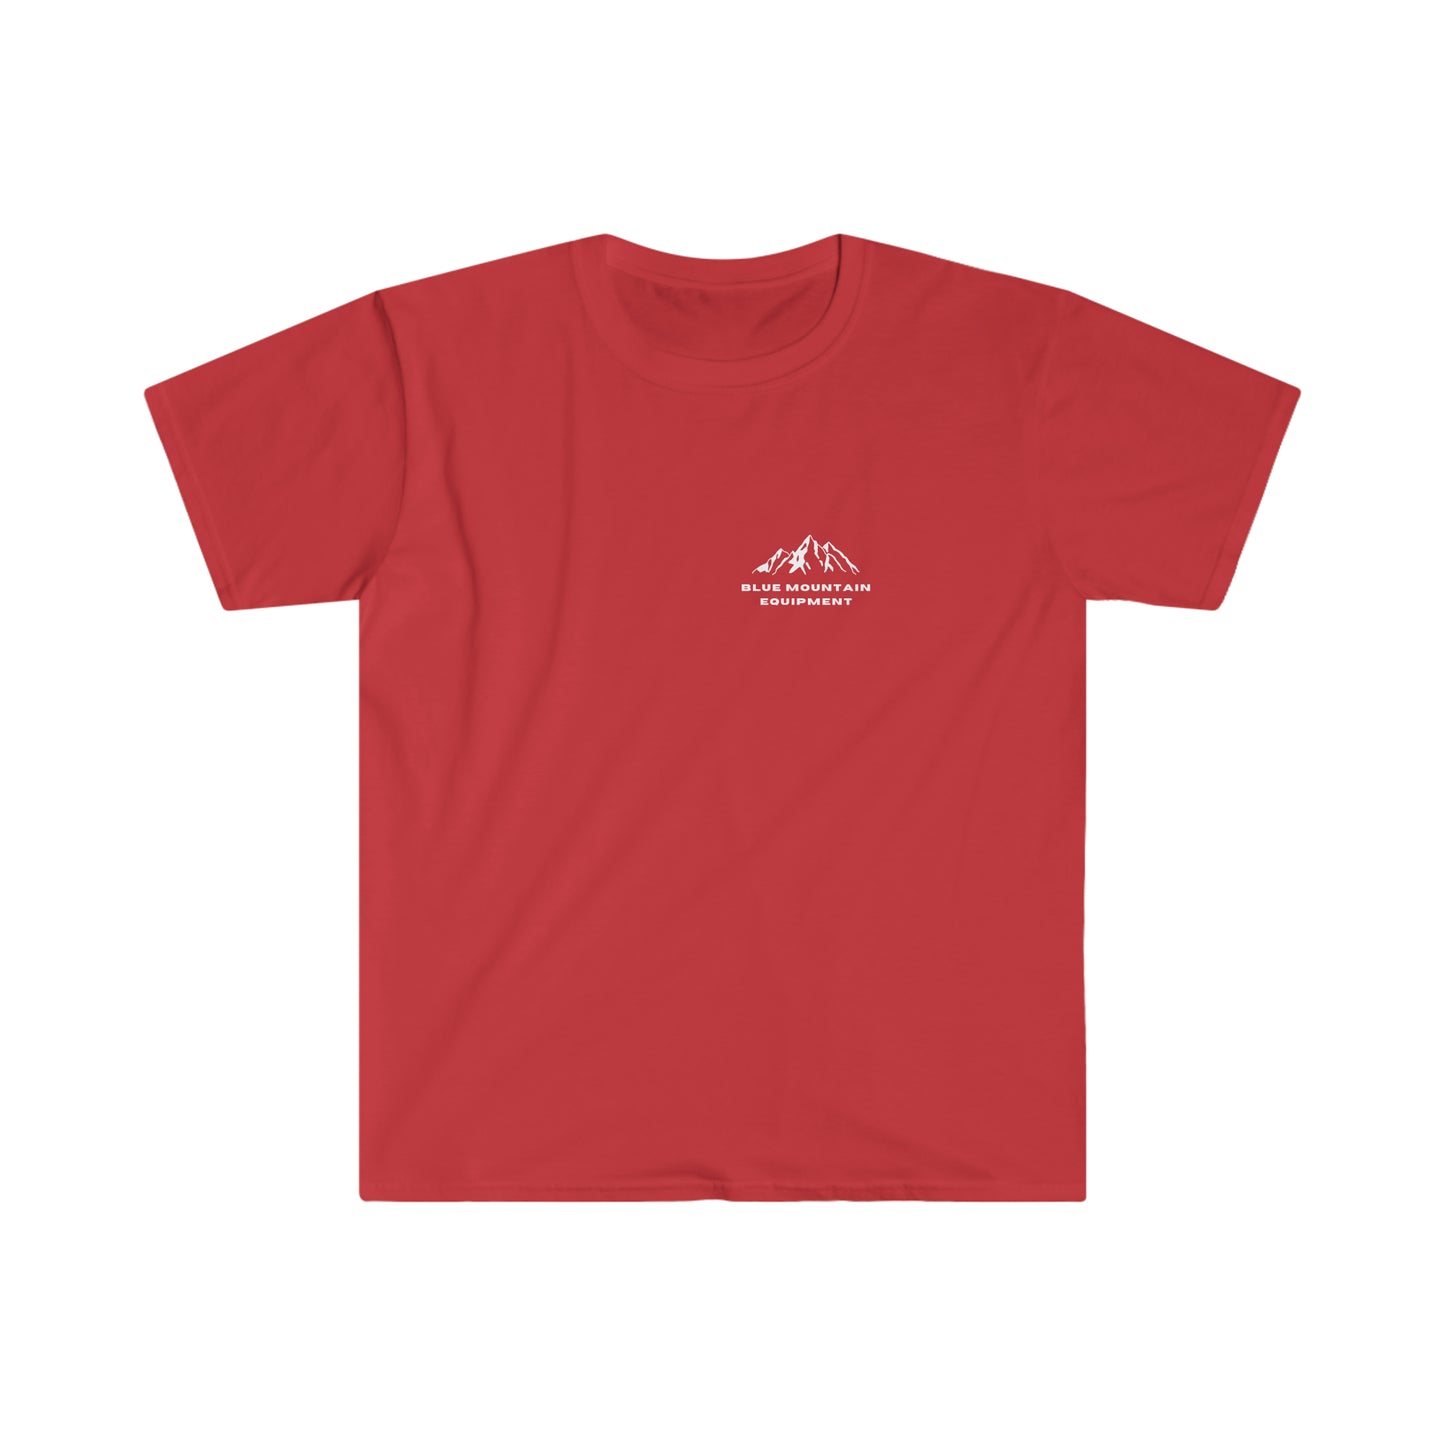 Unisex Soft-Style T-Shirt - 99 Problems - Kayak